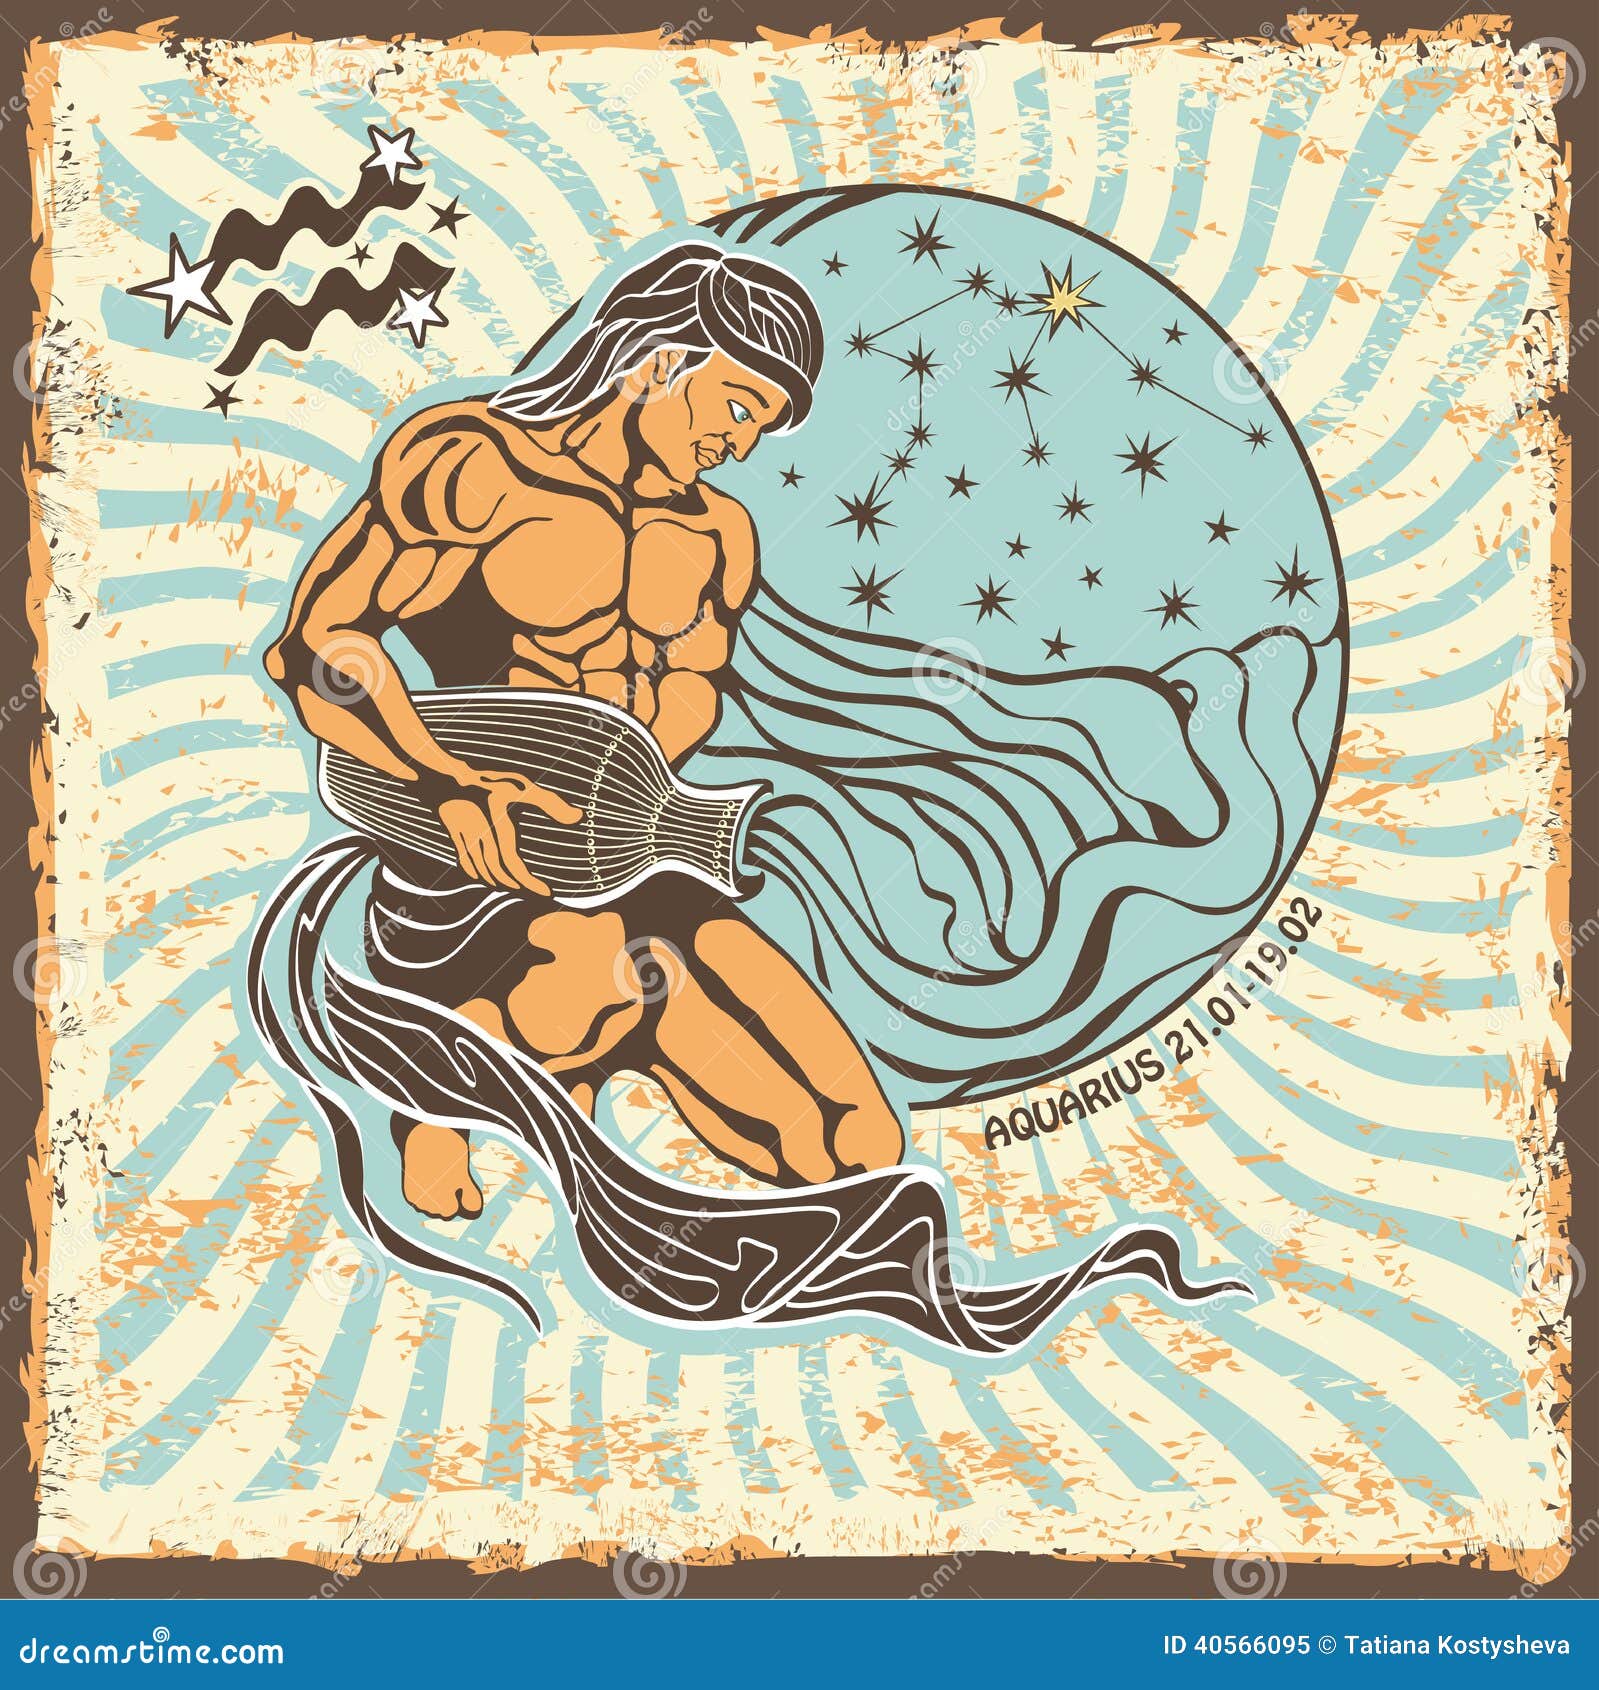 aquarius zodiac sign.vintage horoscope card